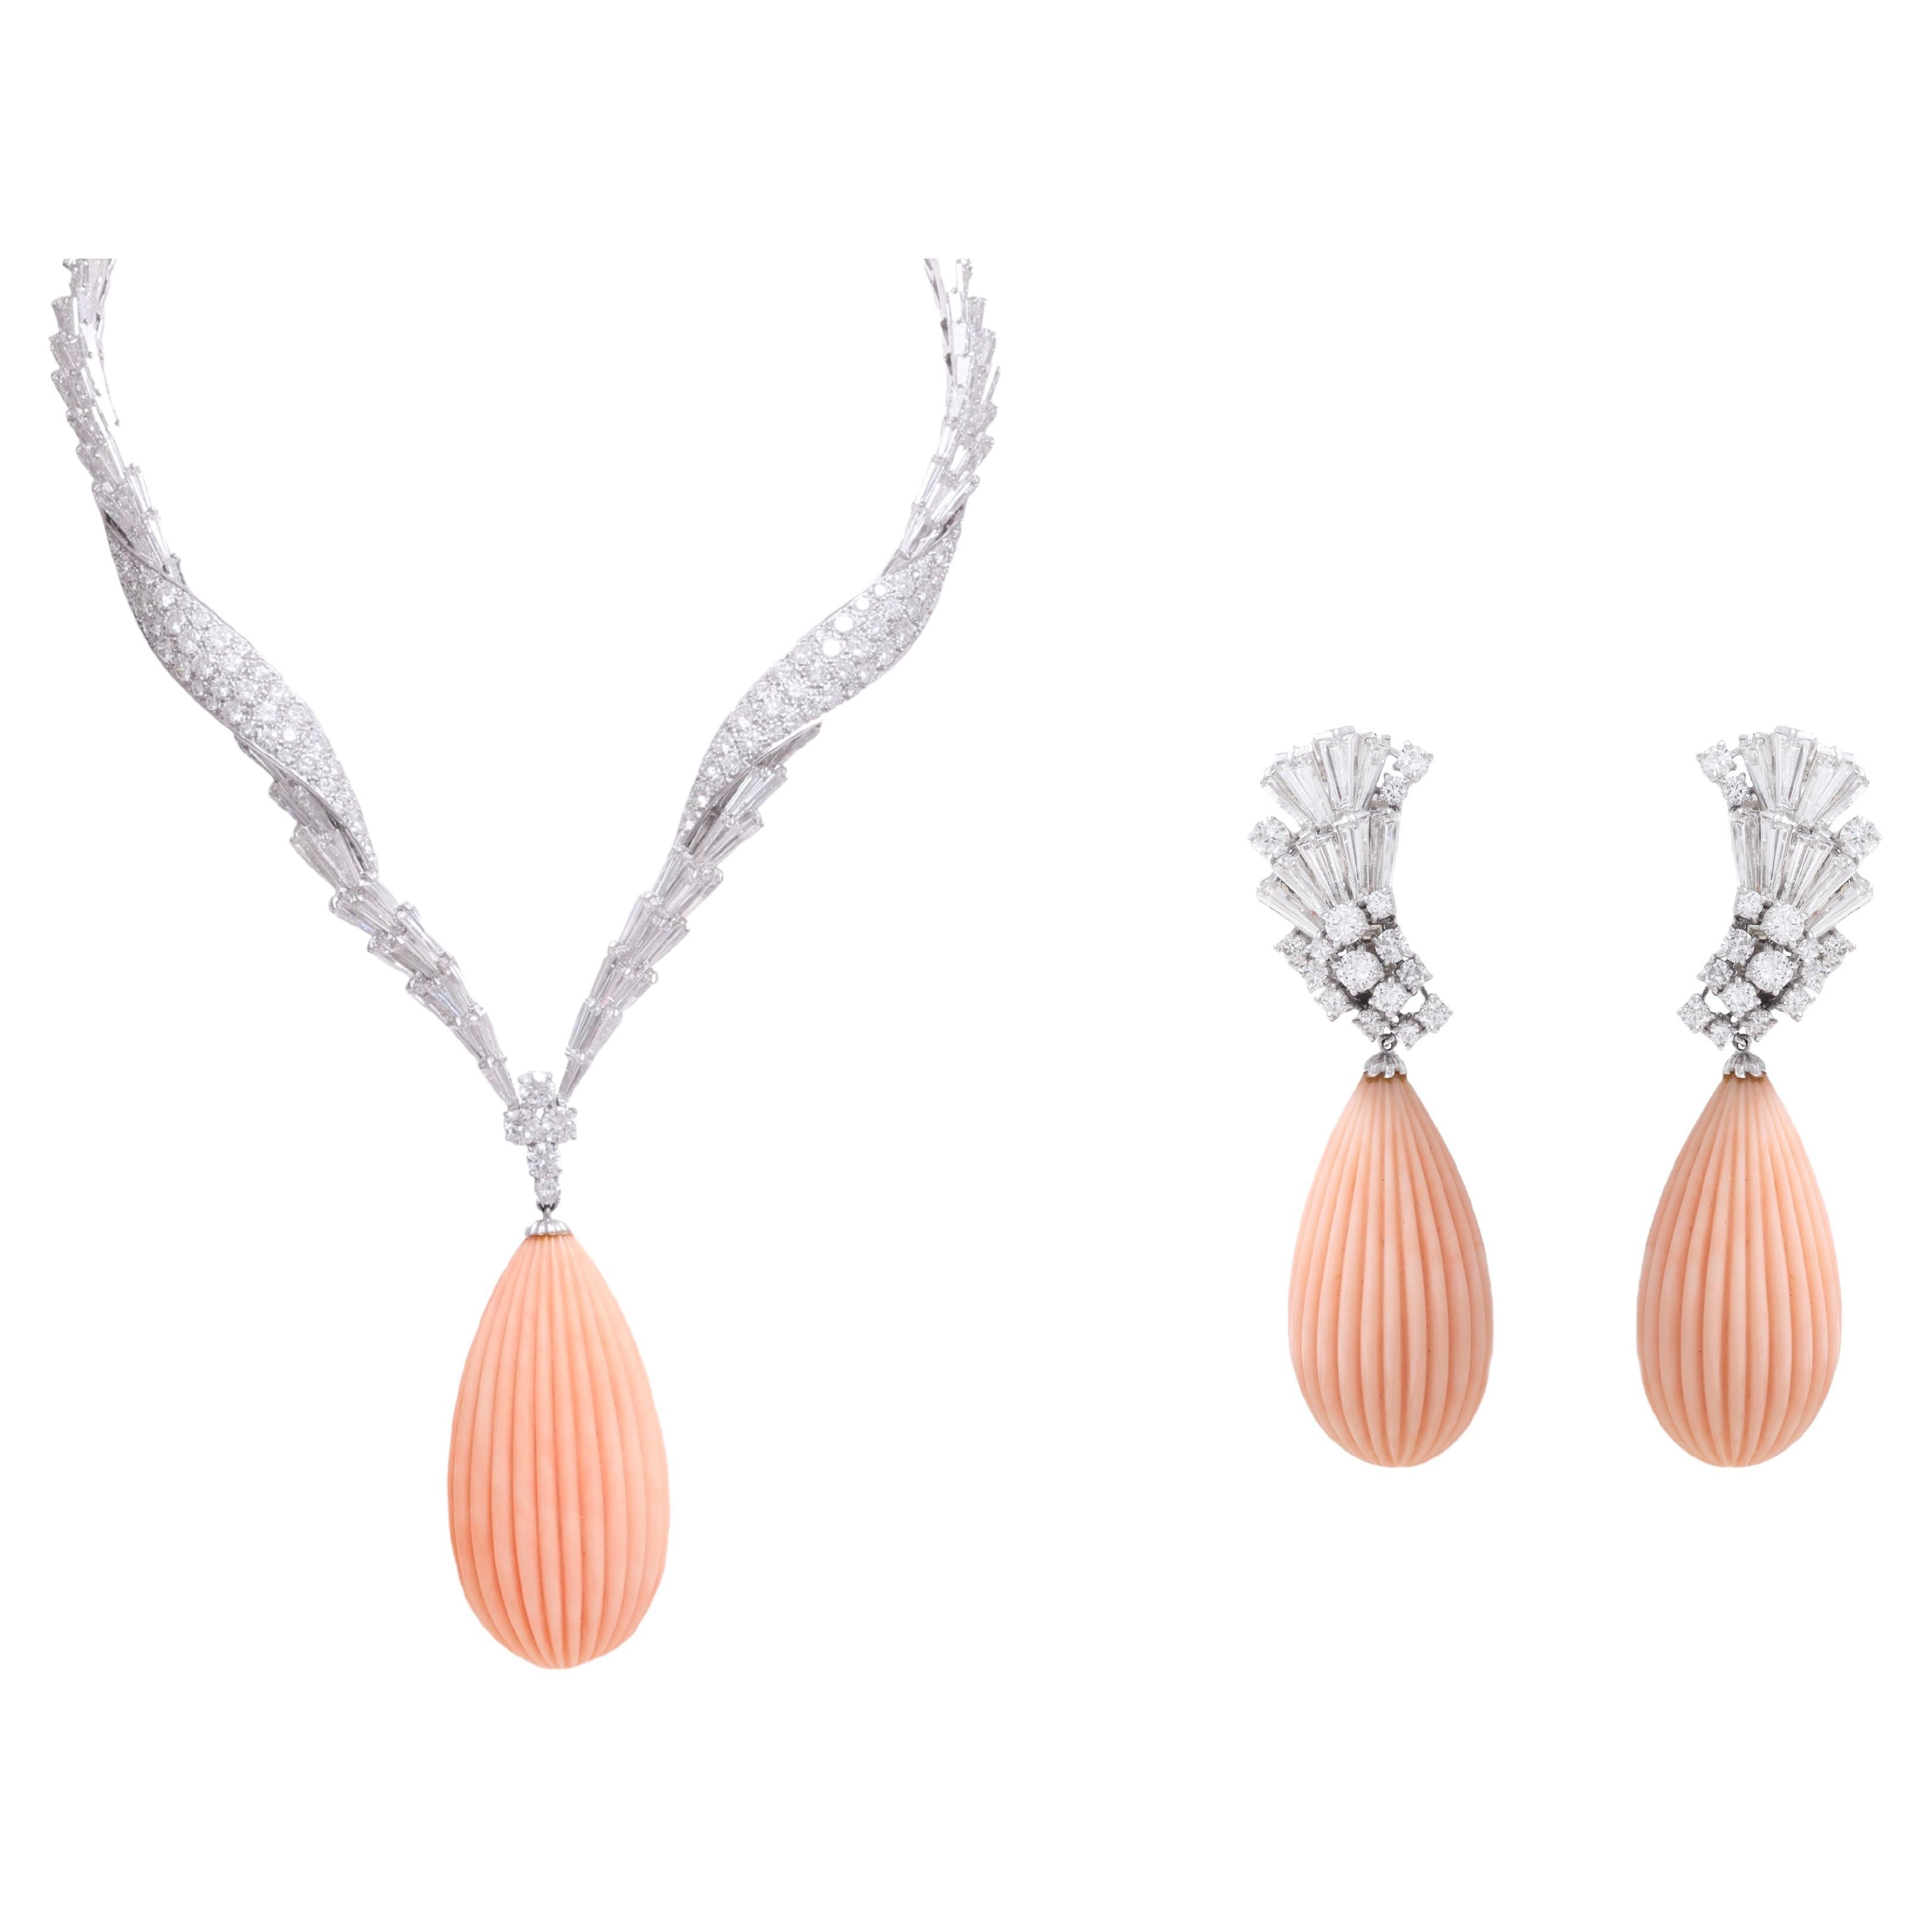 Asprey London Set Necklace & Earrings Coral&Diamond, Gübelin, Estate Sultan Oman